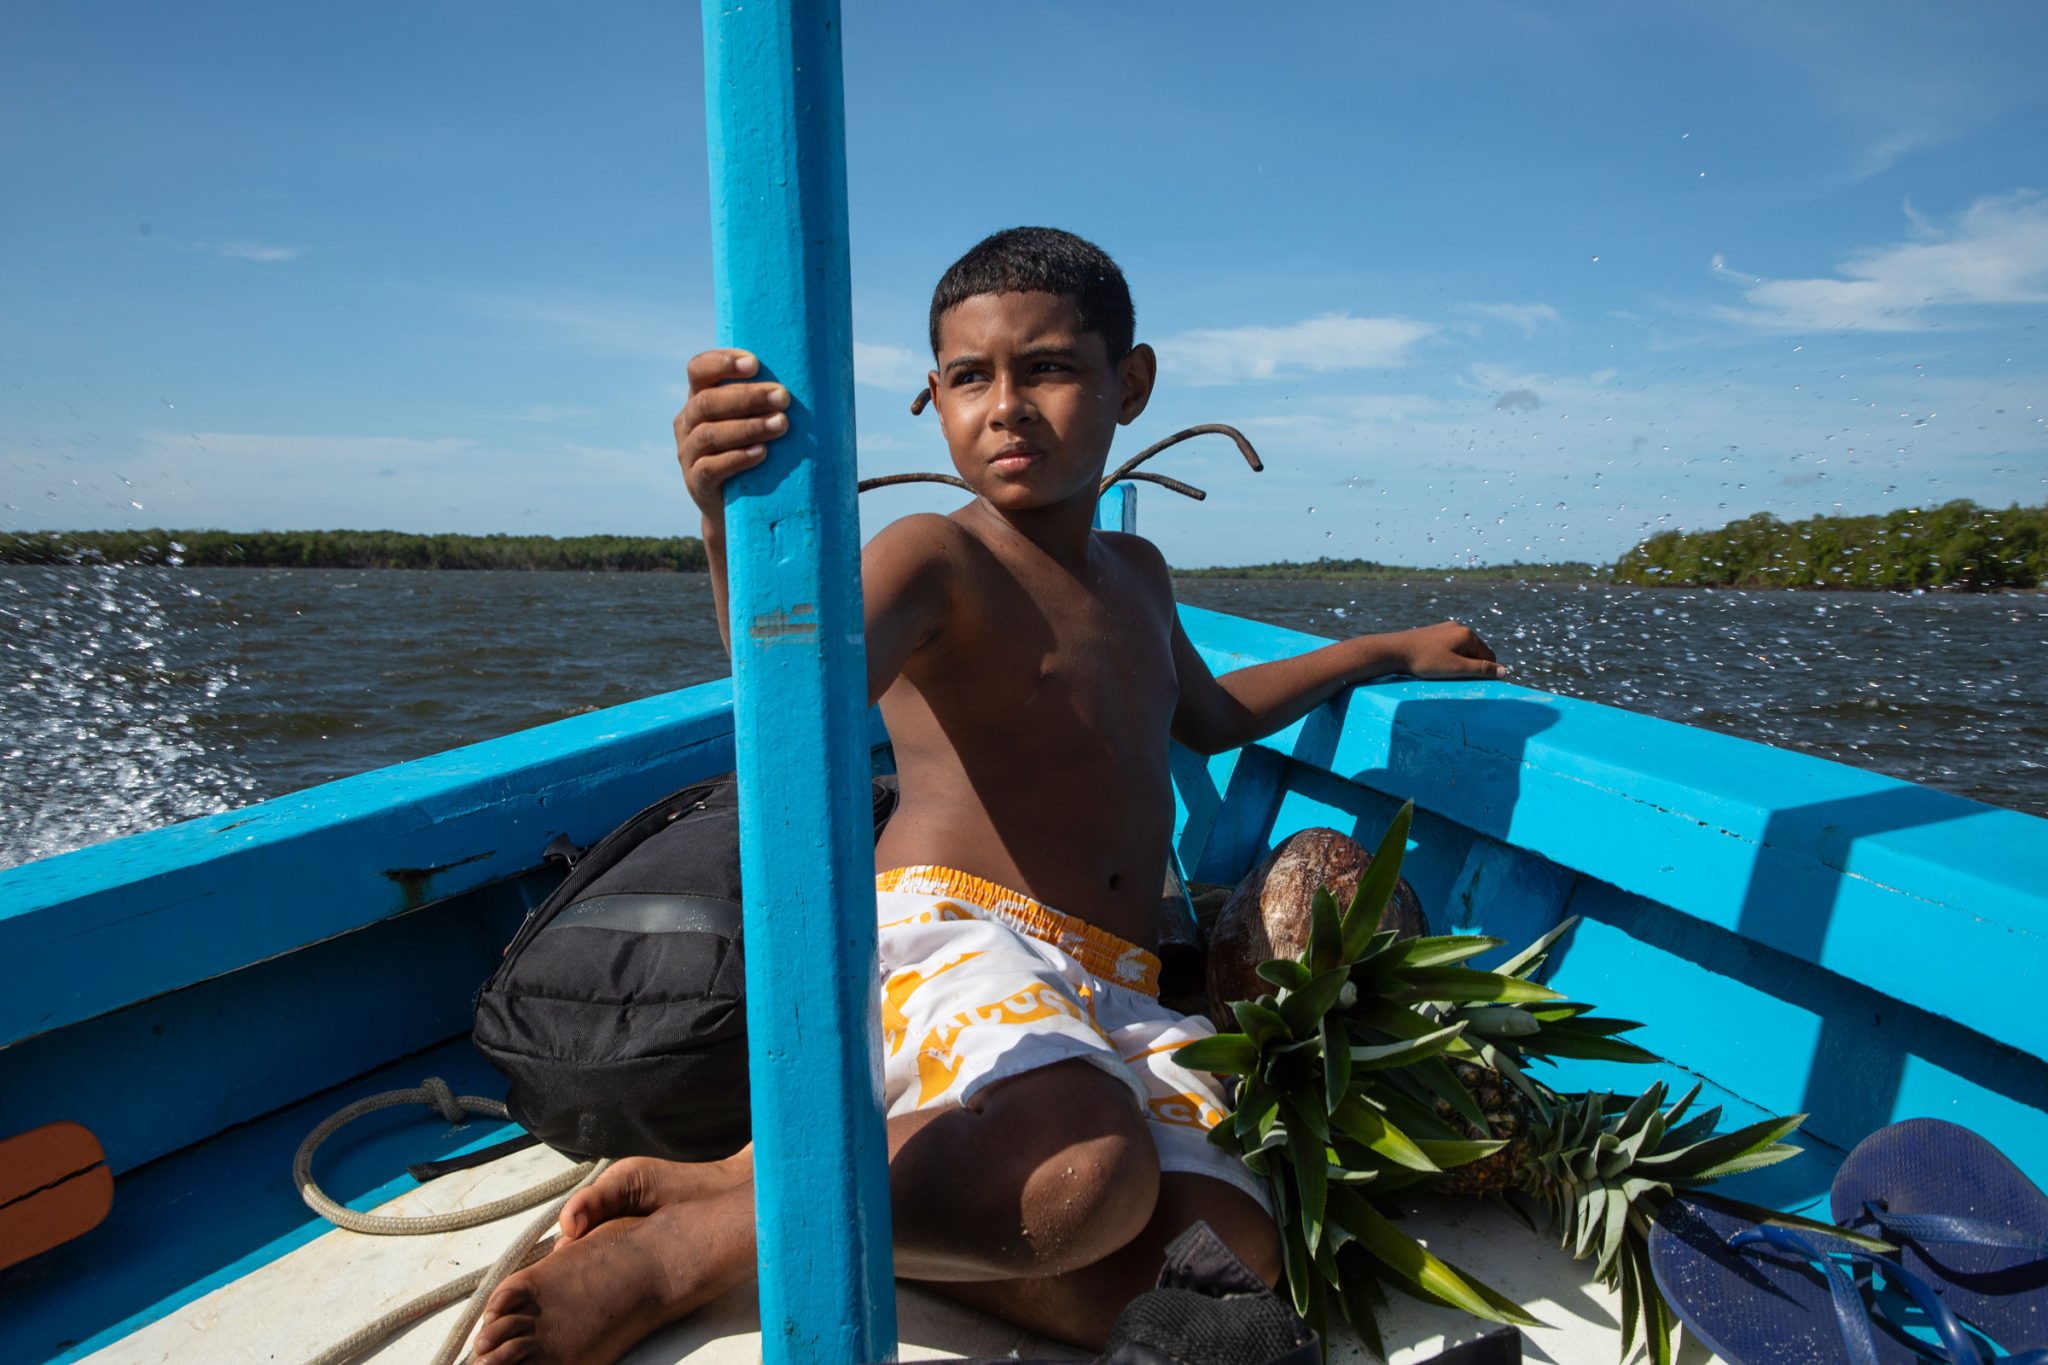 villagers in mangrove region